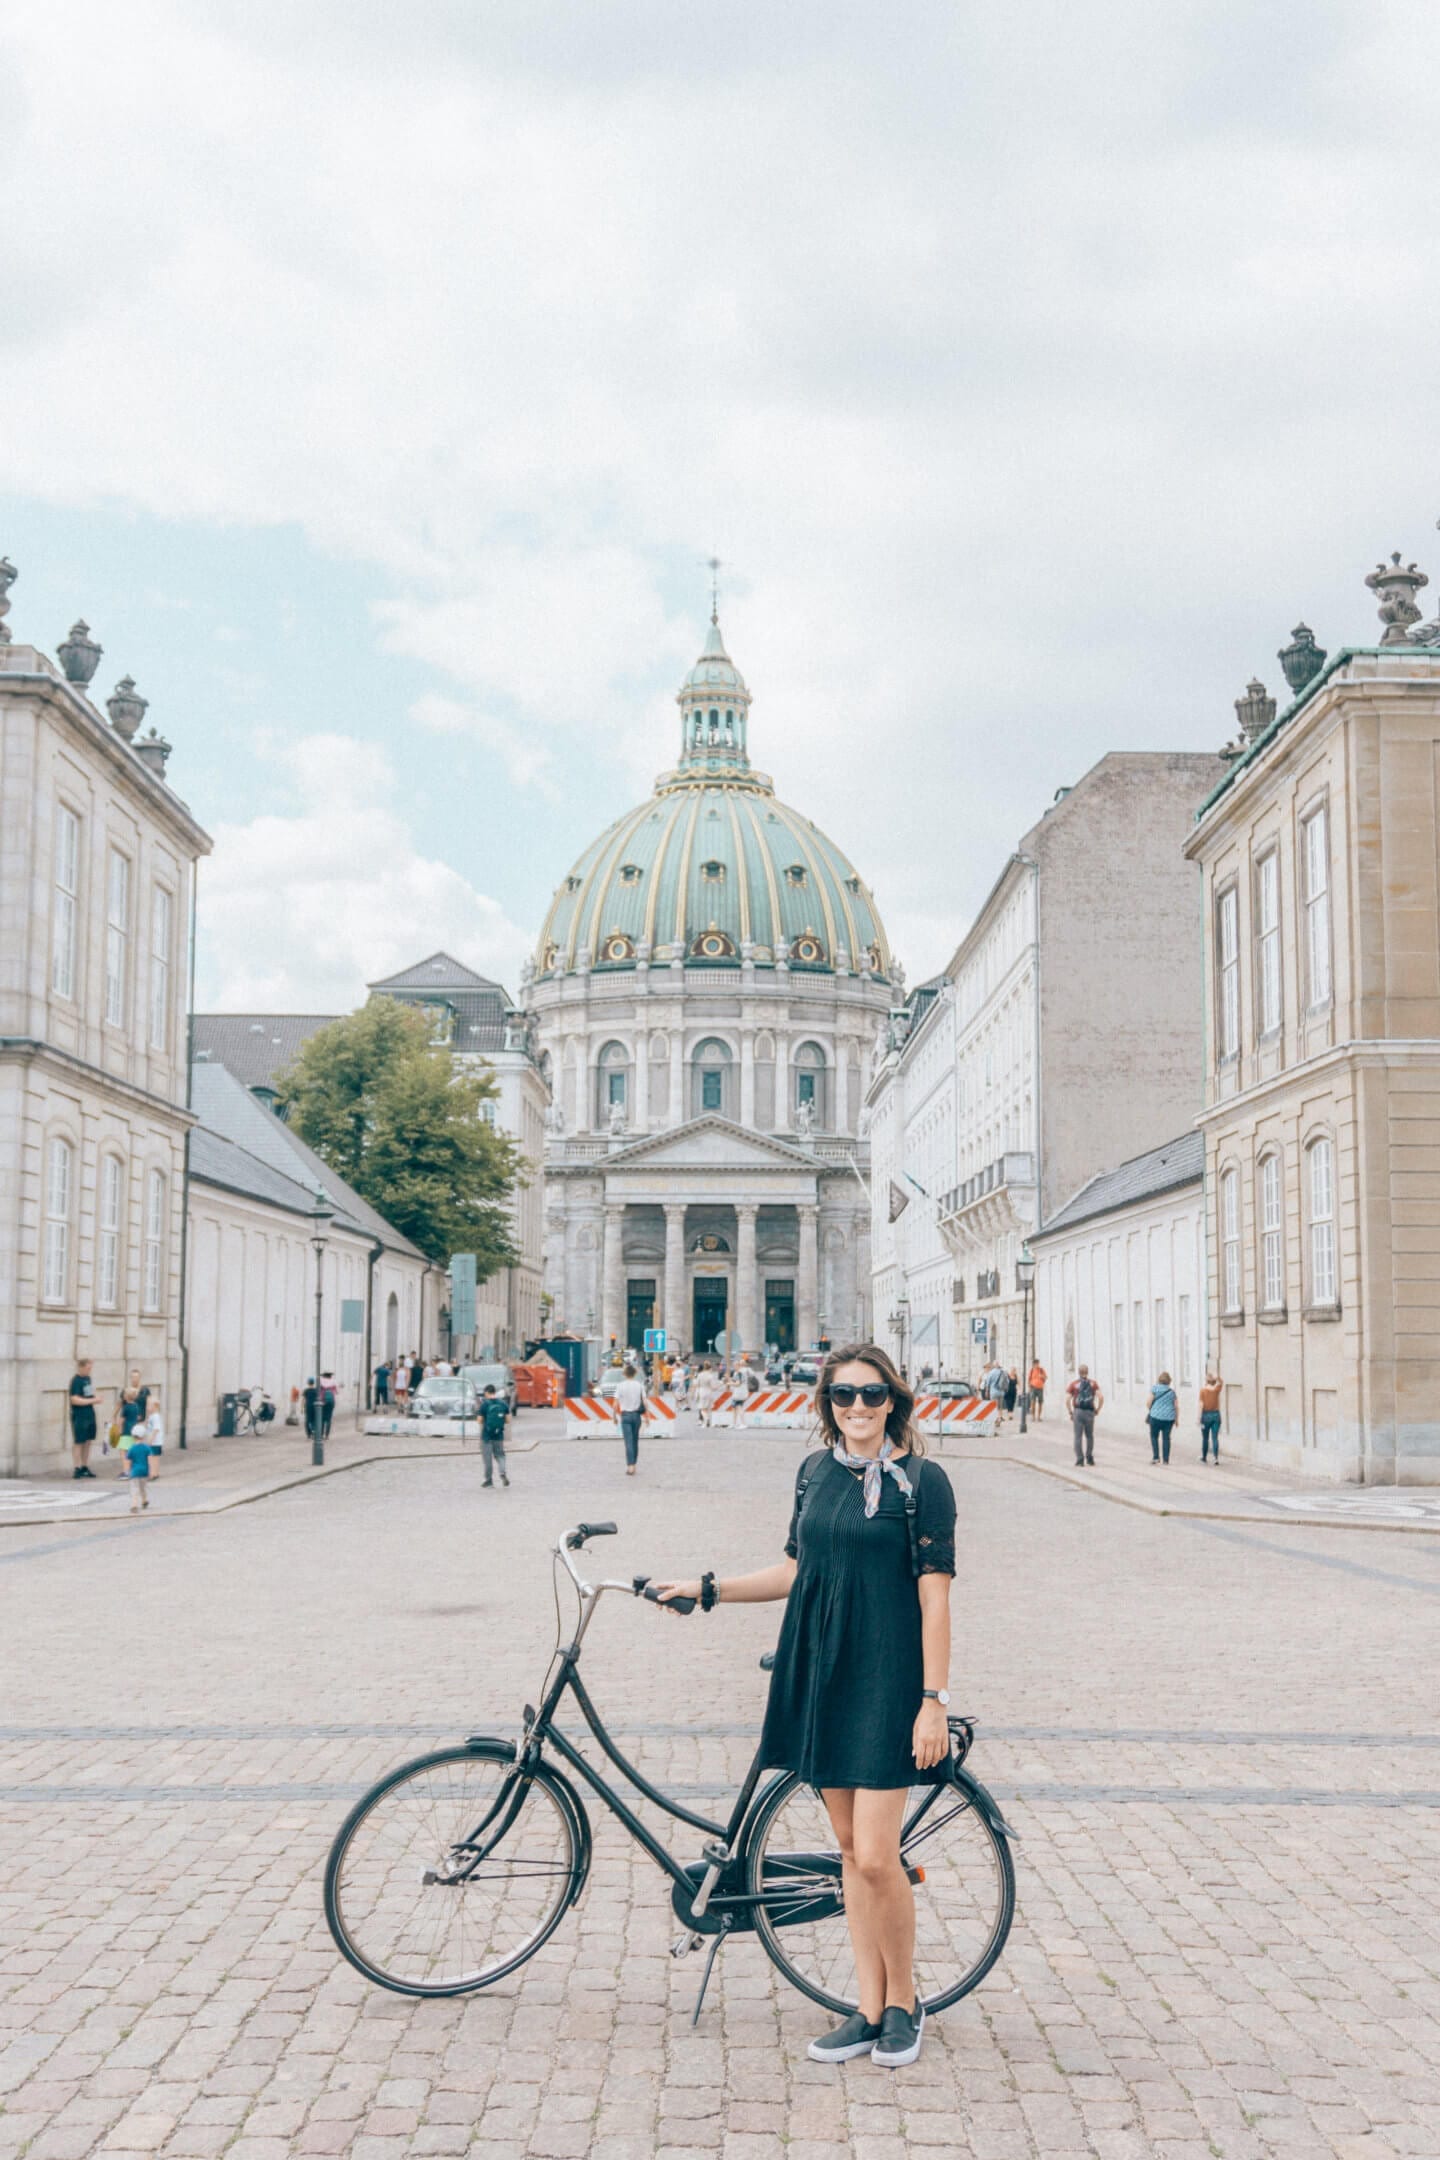 A Girl biking around Copenhagen in front of the domed church